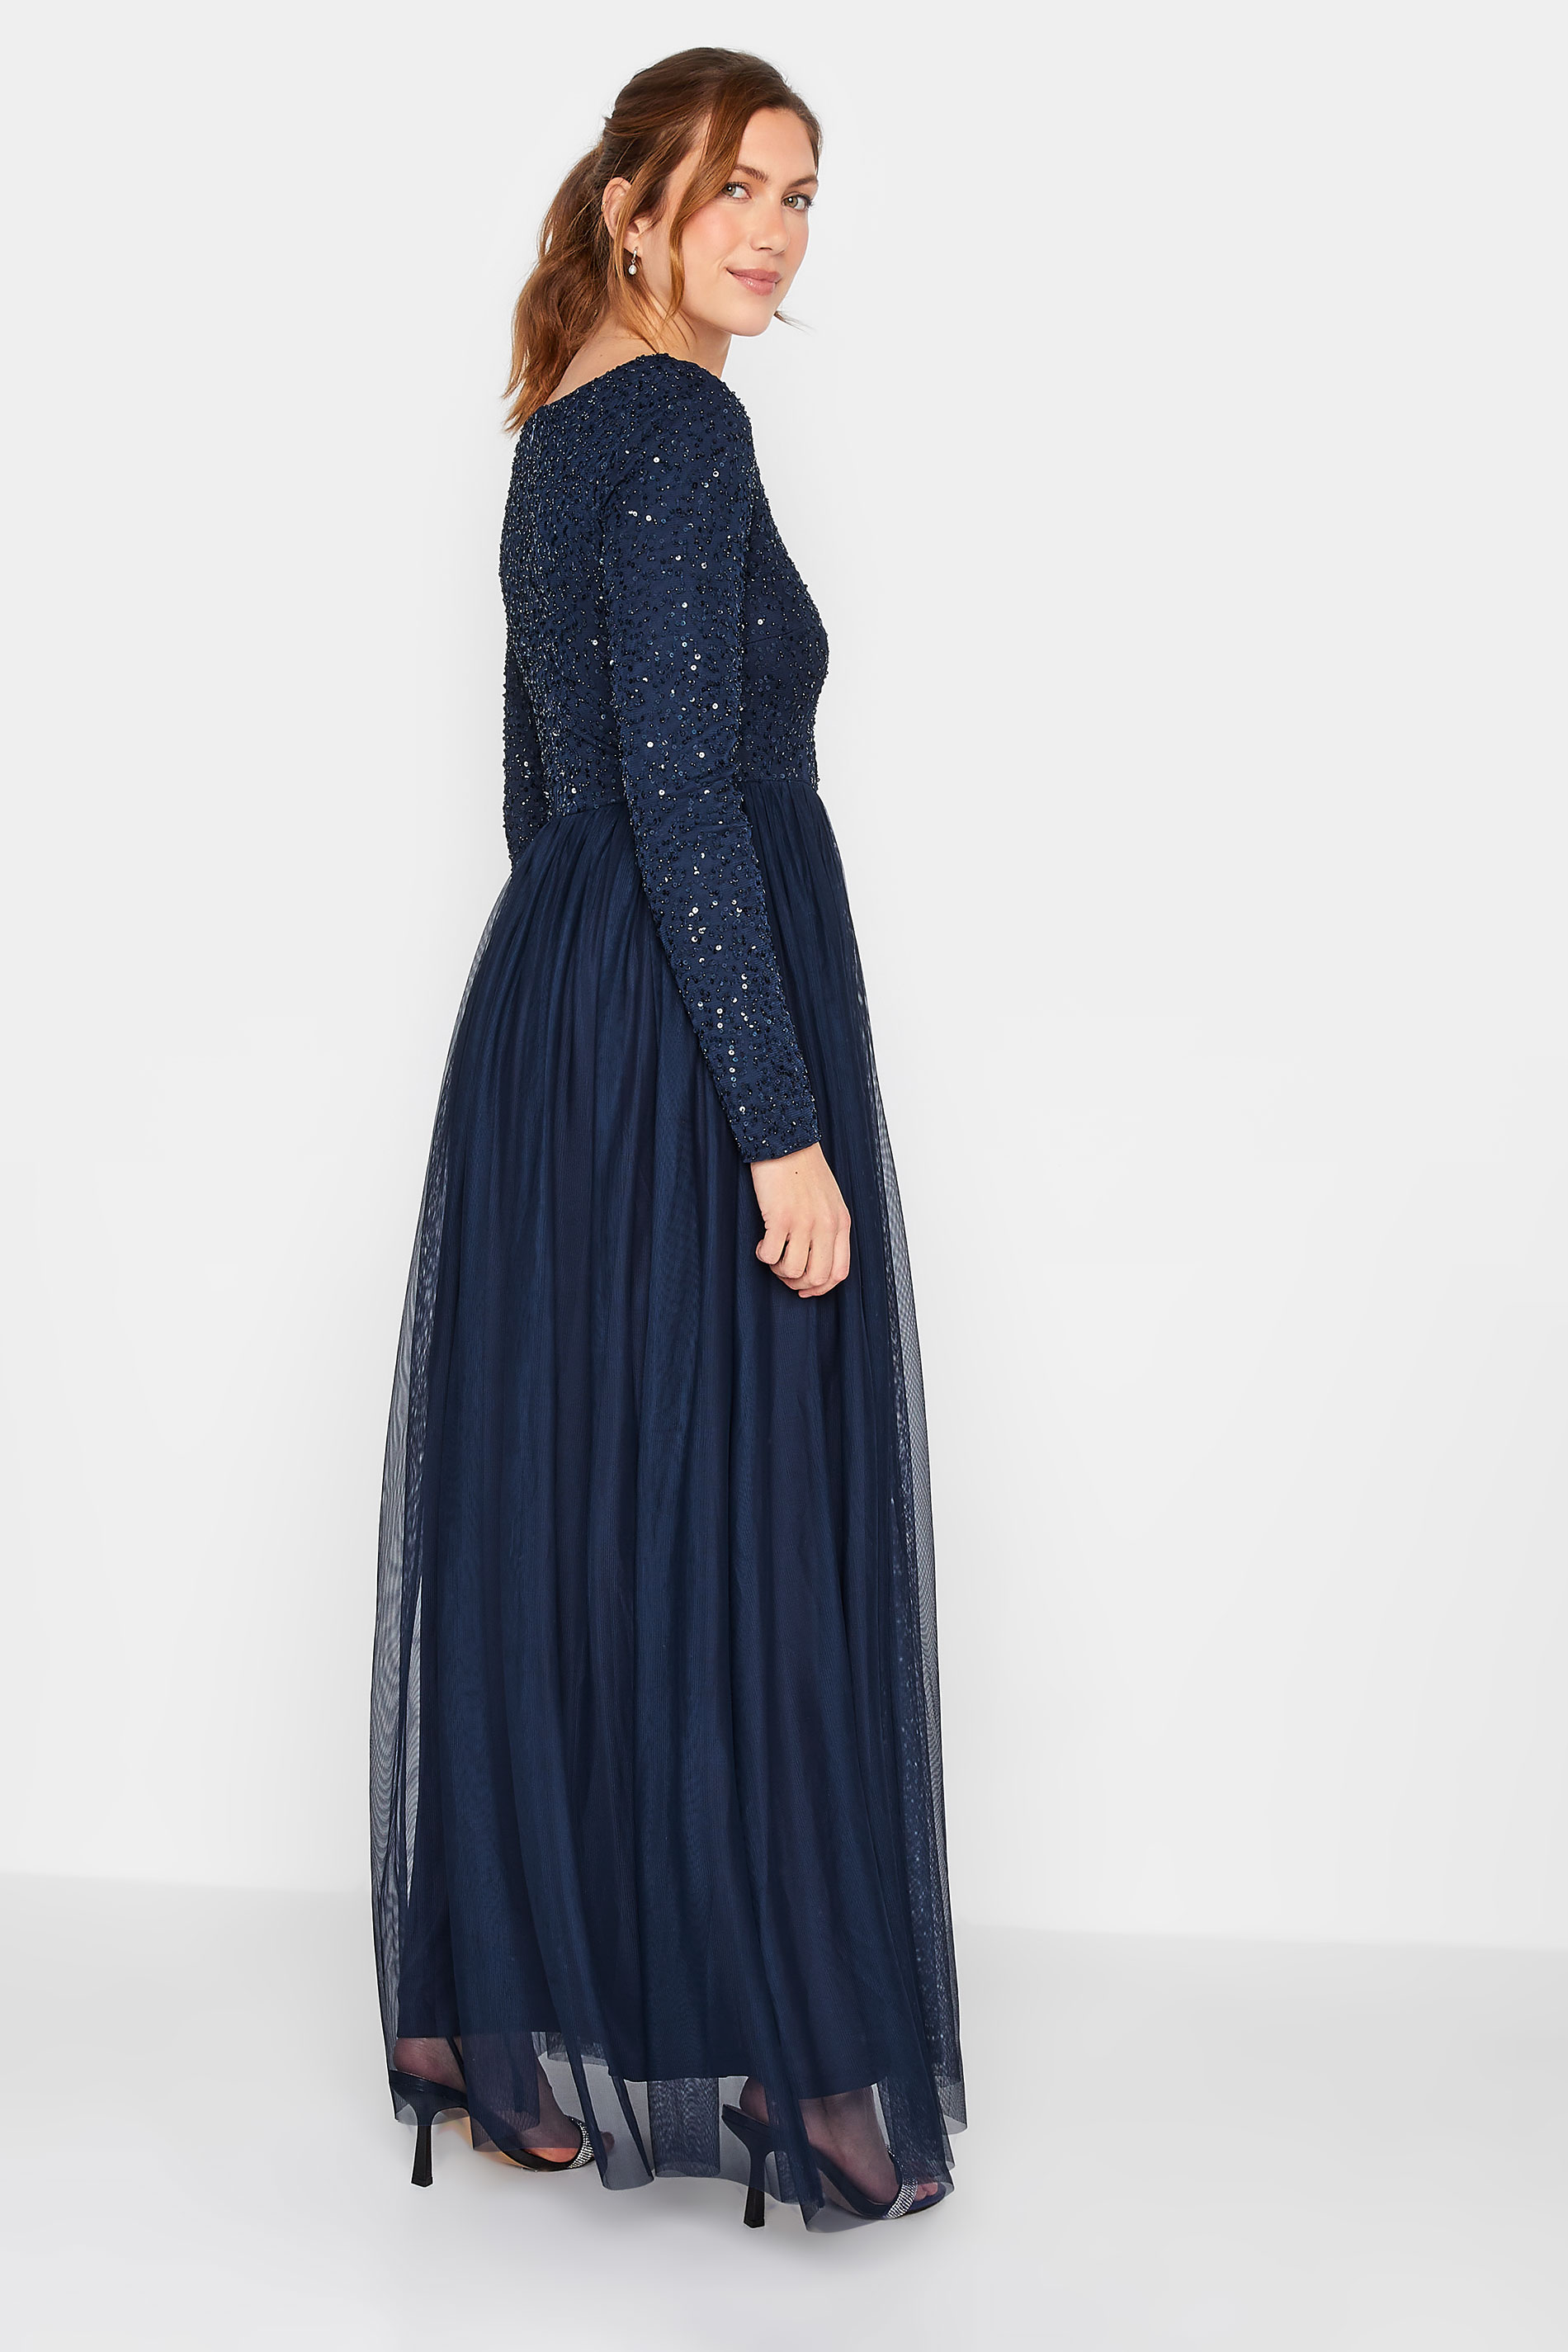 LTS Tall Women's Navy Blue Long Sleeve Sequin Hand Embellished Maxi Dress | Long Tall Sally 3